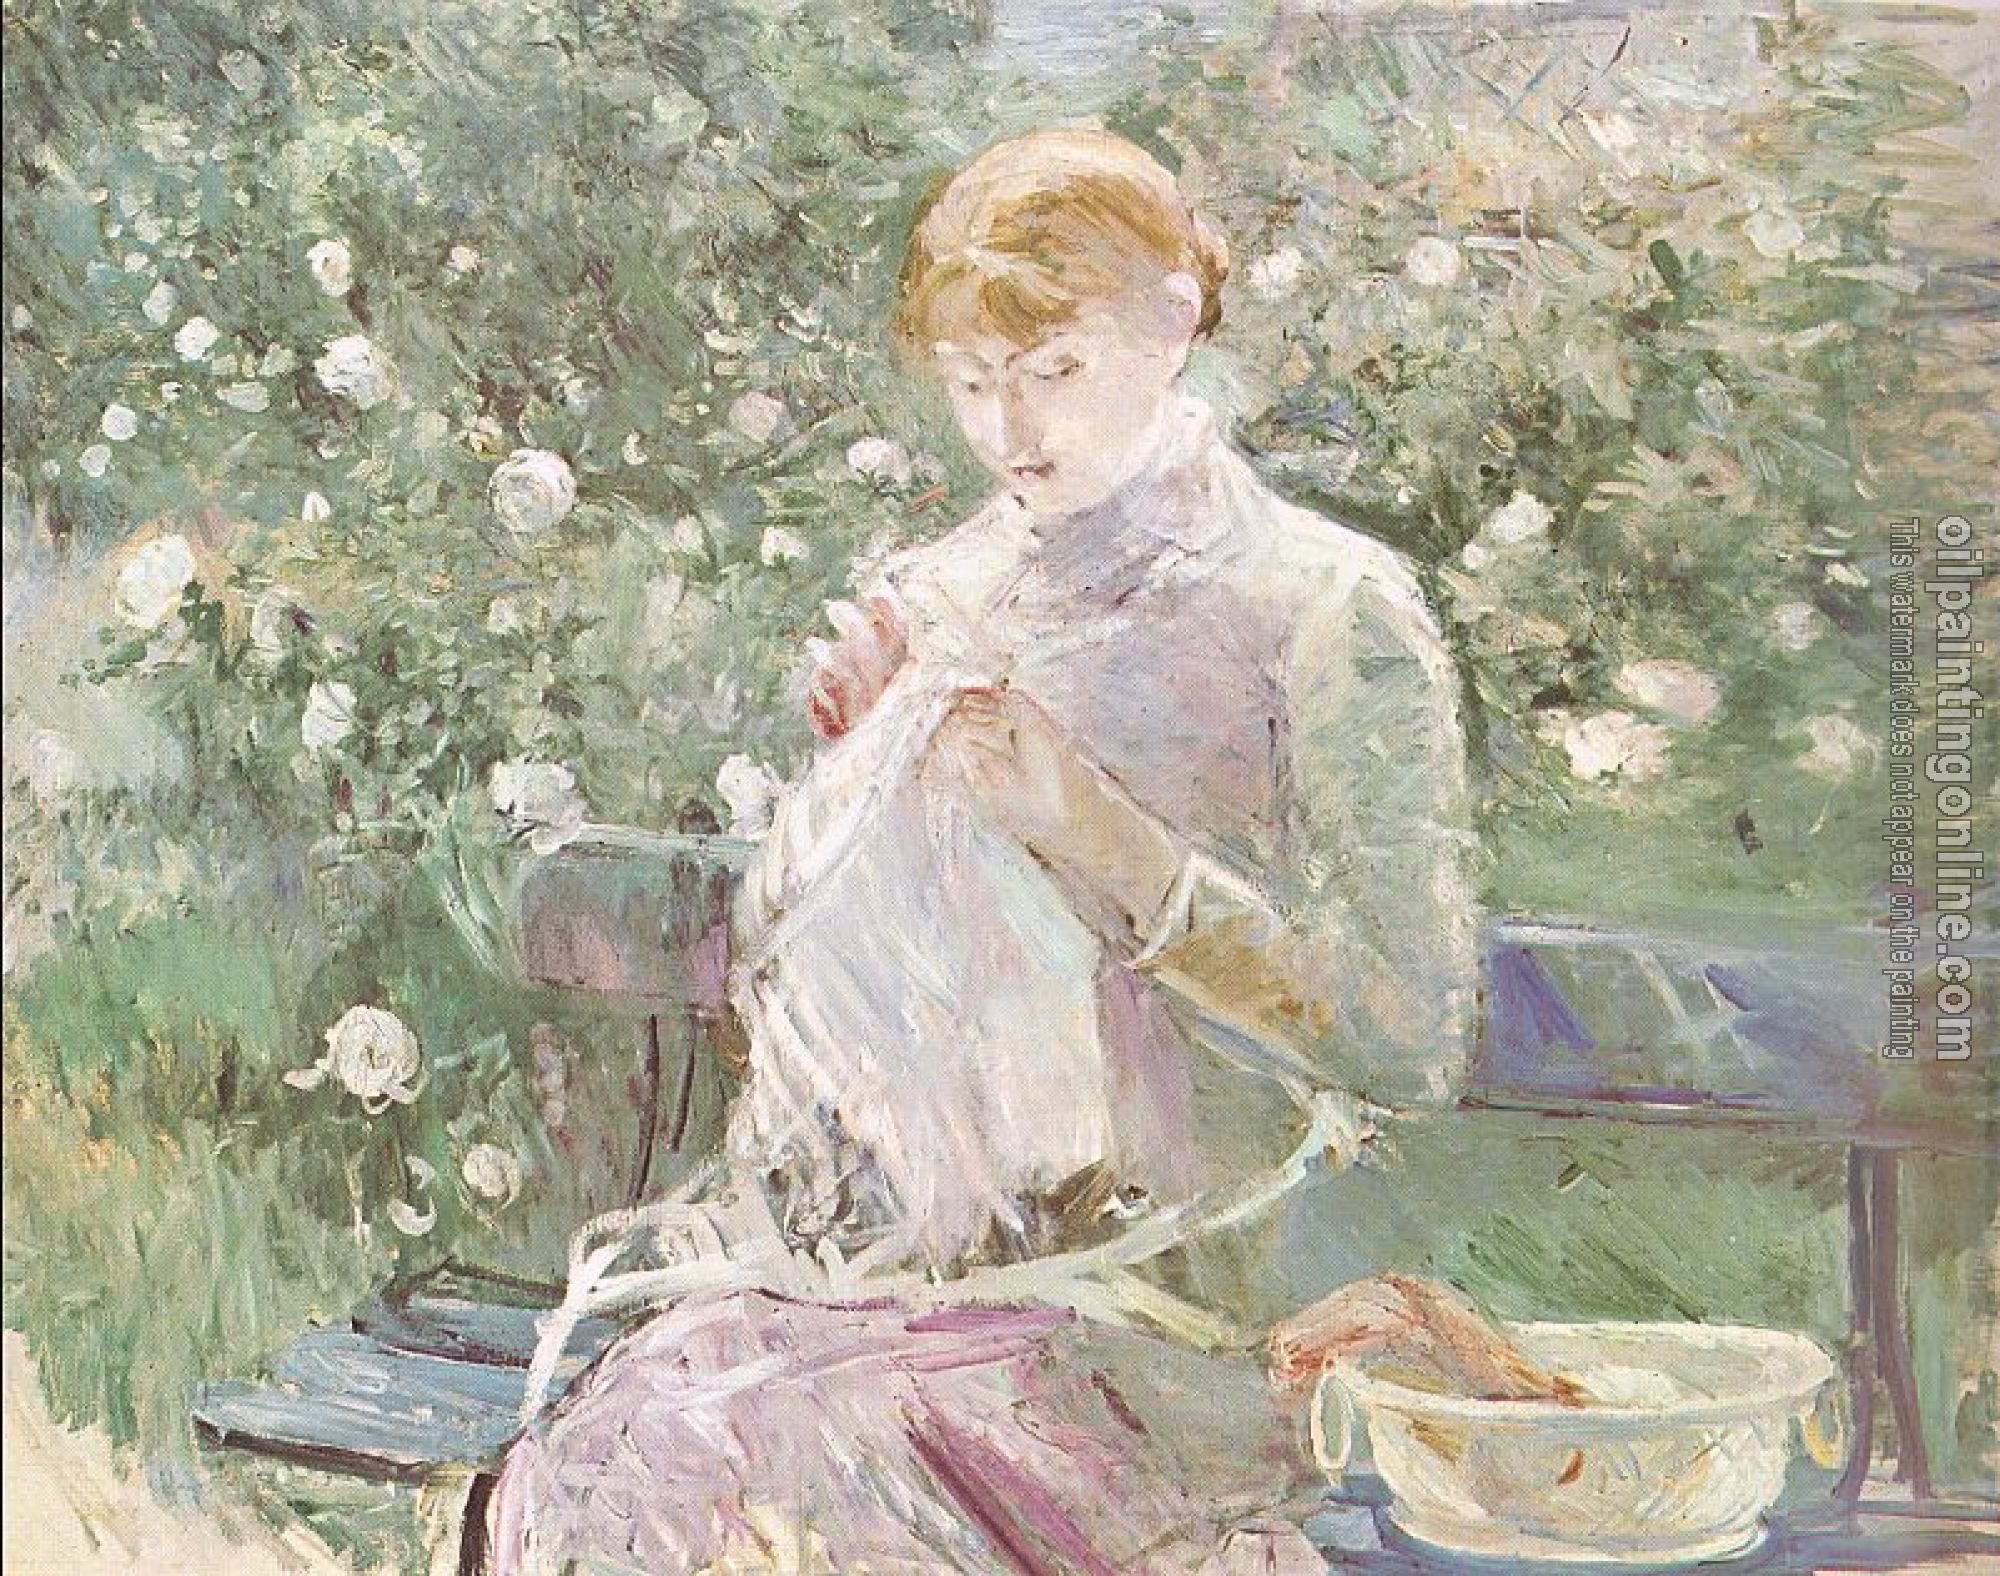 Morisot, Berthe - Young Woman Sewing in a Garden